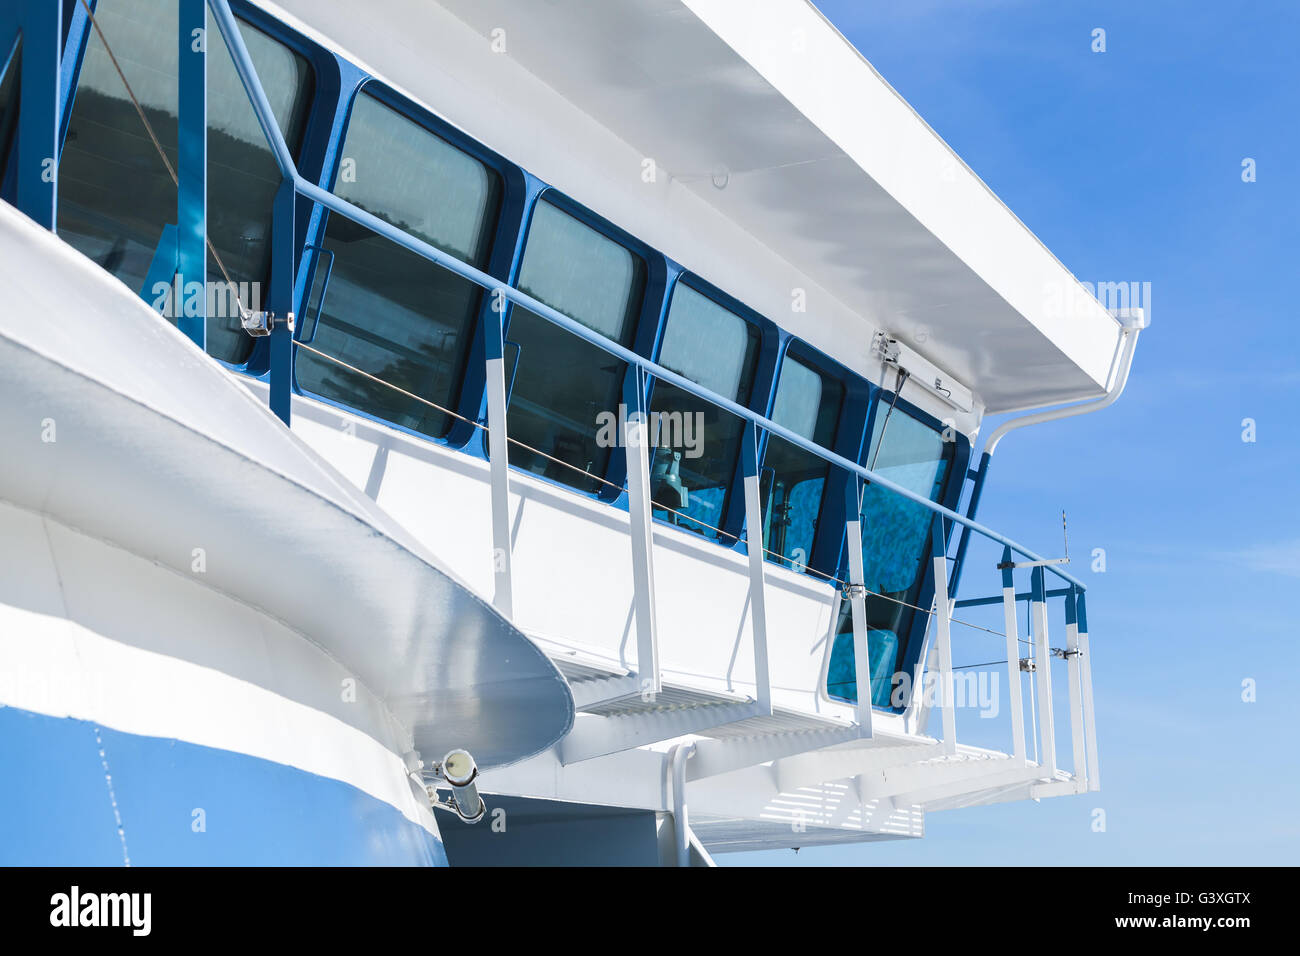 Modern passenger ferry ship. Captains bridge exterior over clear blue sky Stock Photo